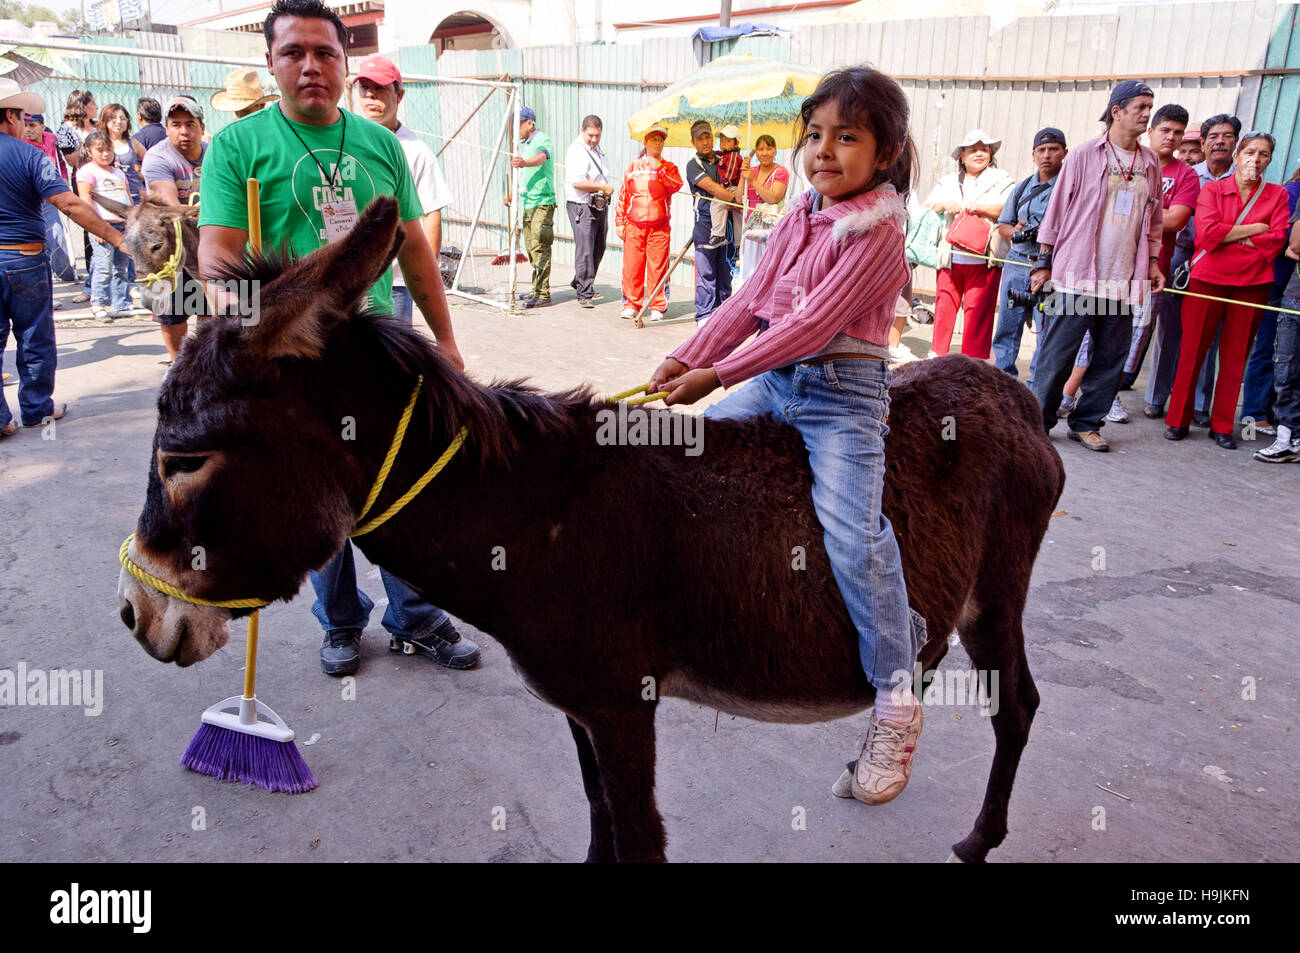 Little girl riding a donkey Stock Photo